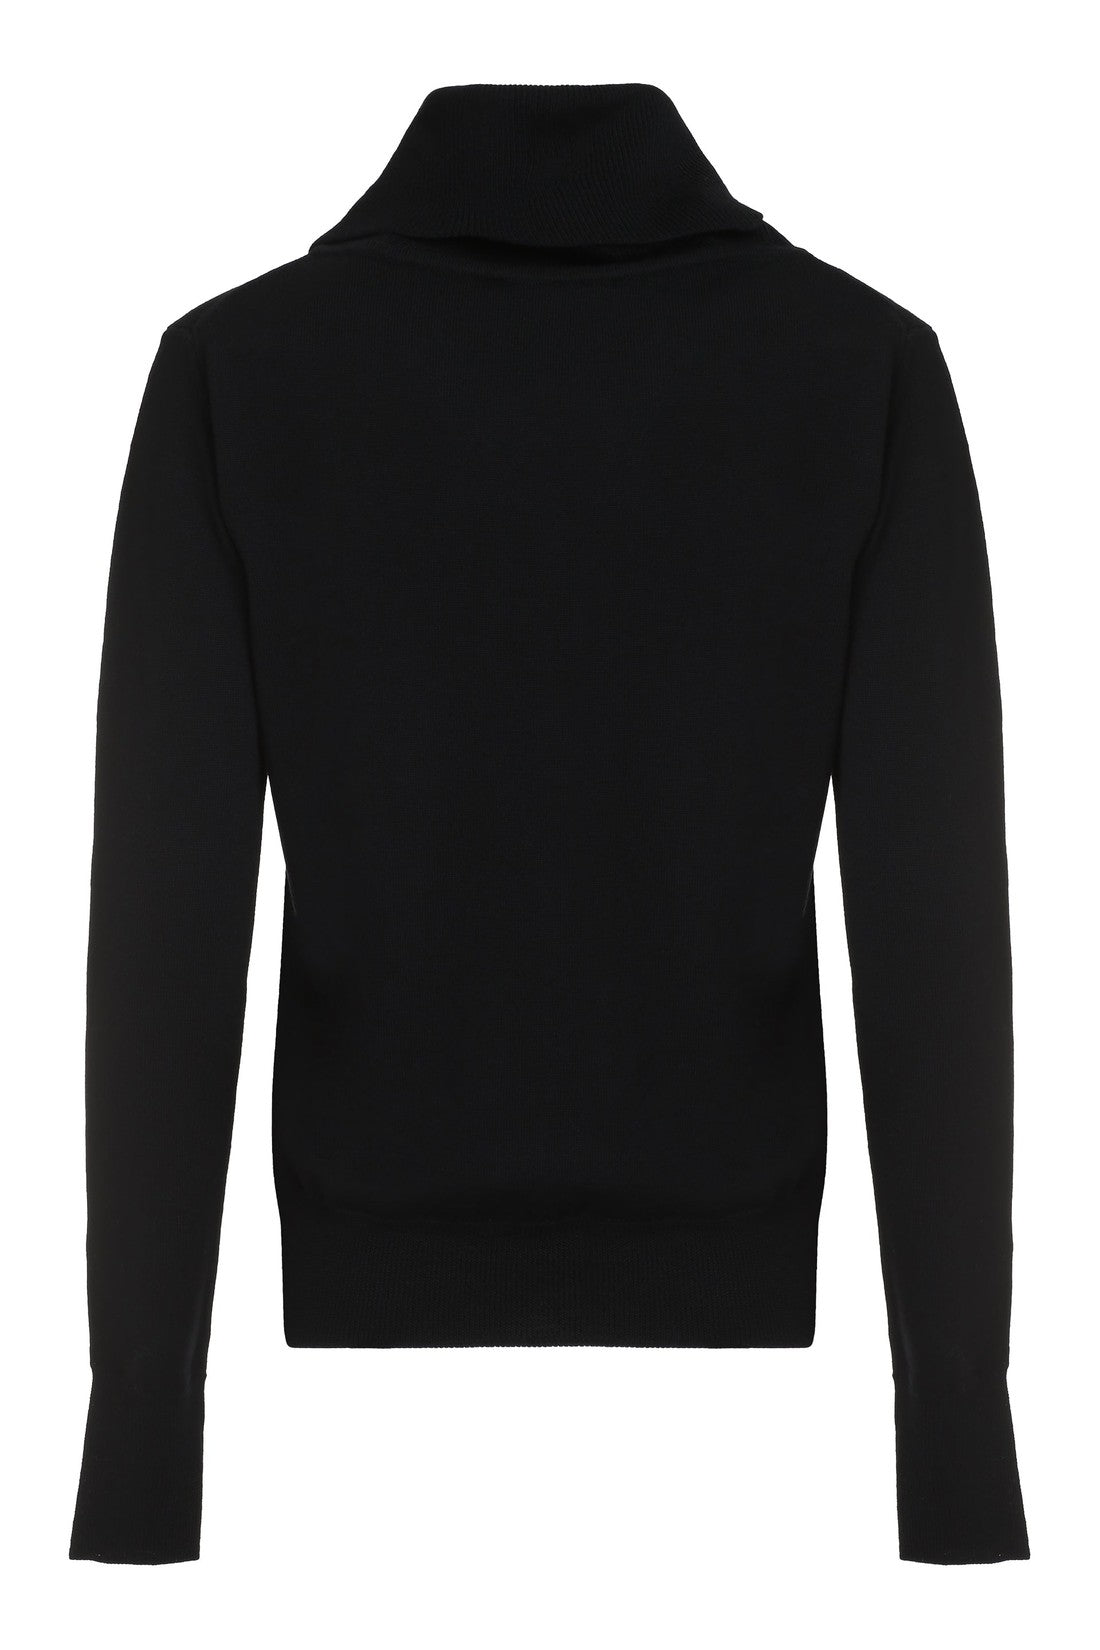 Vivienne Westwood-OUTLET-SALE-Giulia Virgin-wool turtleneck sweater-ARCHIVIST